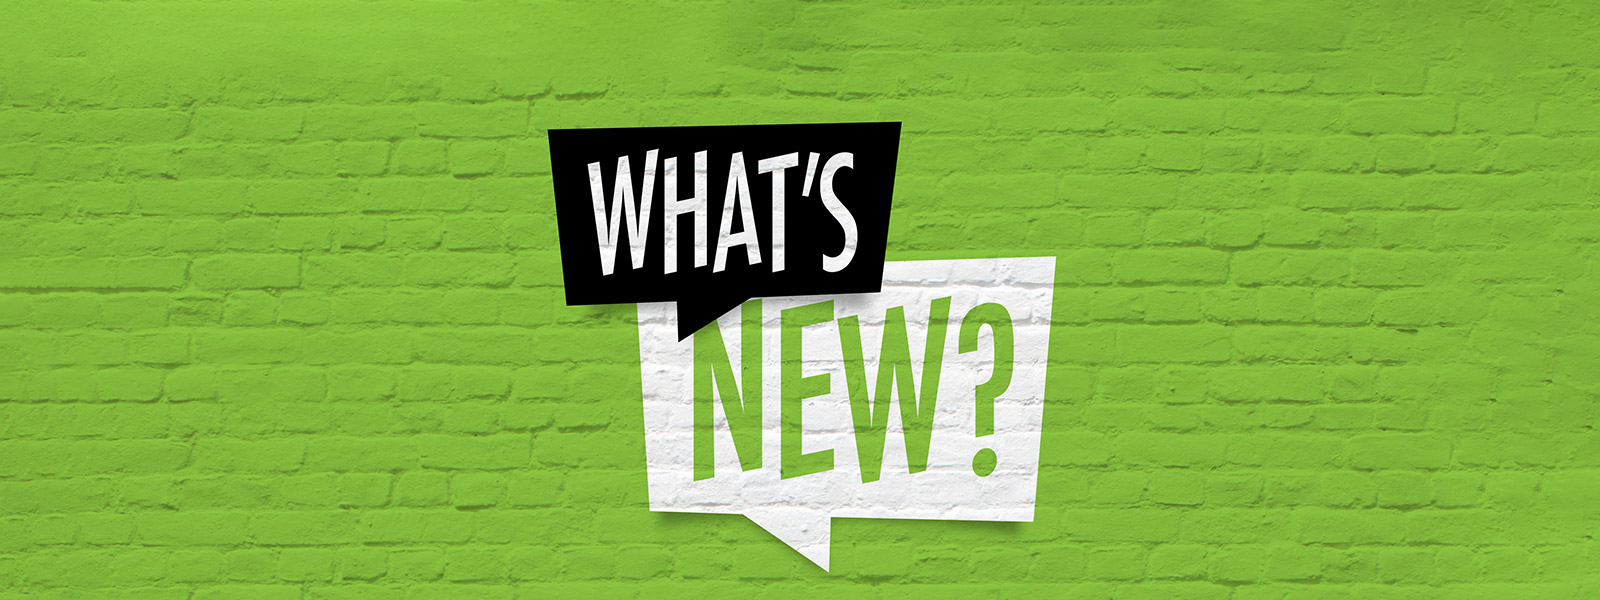 grüne Backsteinwand, Worte "What's new" in Sprechblasen